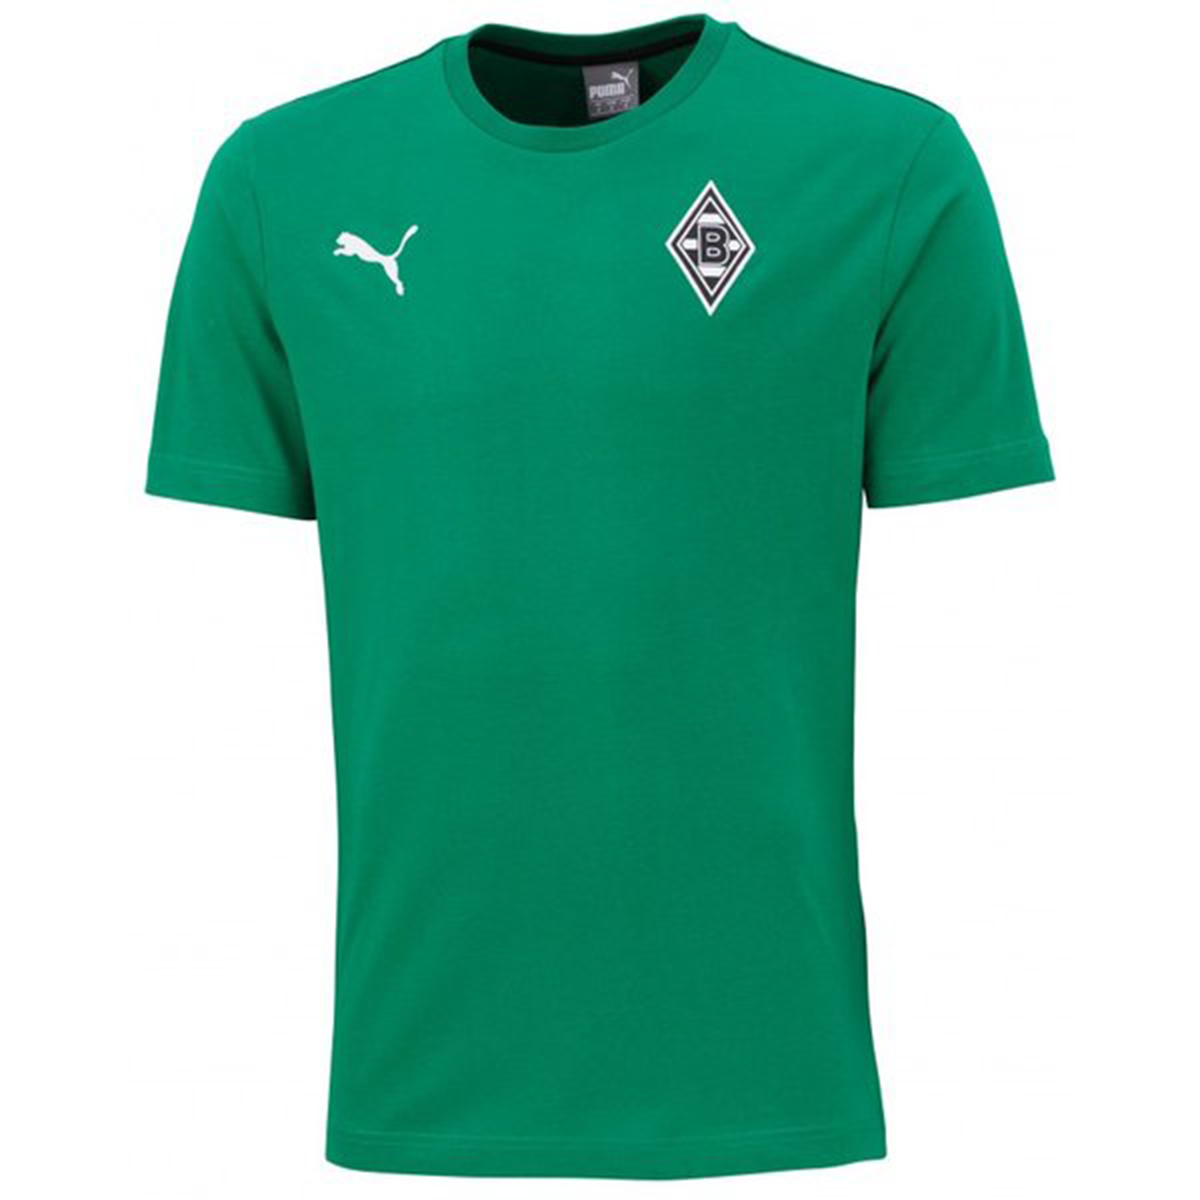 Puma BMG Badge Tee T-Shirt Herren Borussia Mönchengladbach grün 754362 02